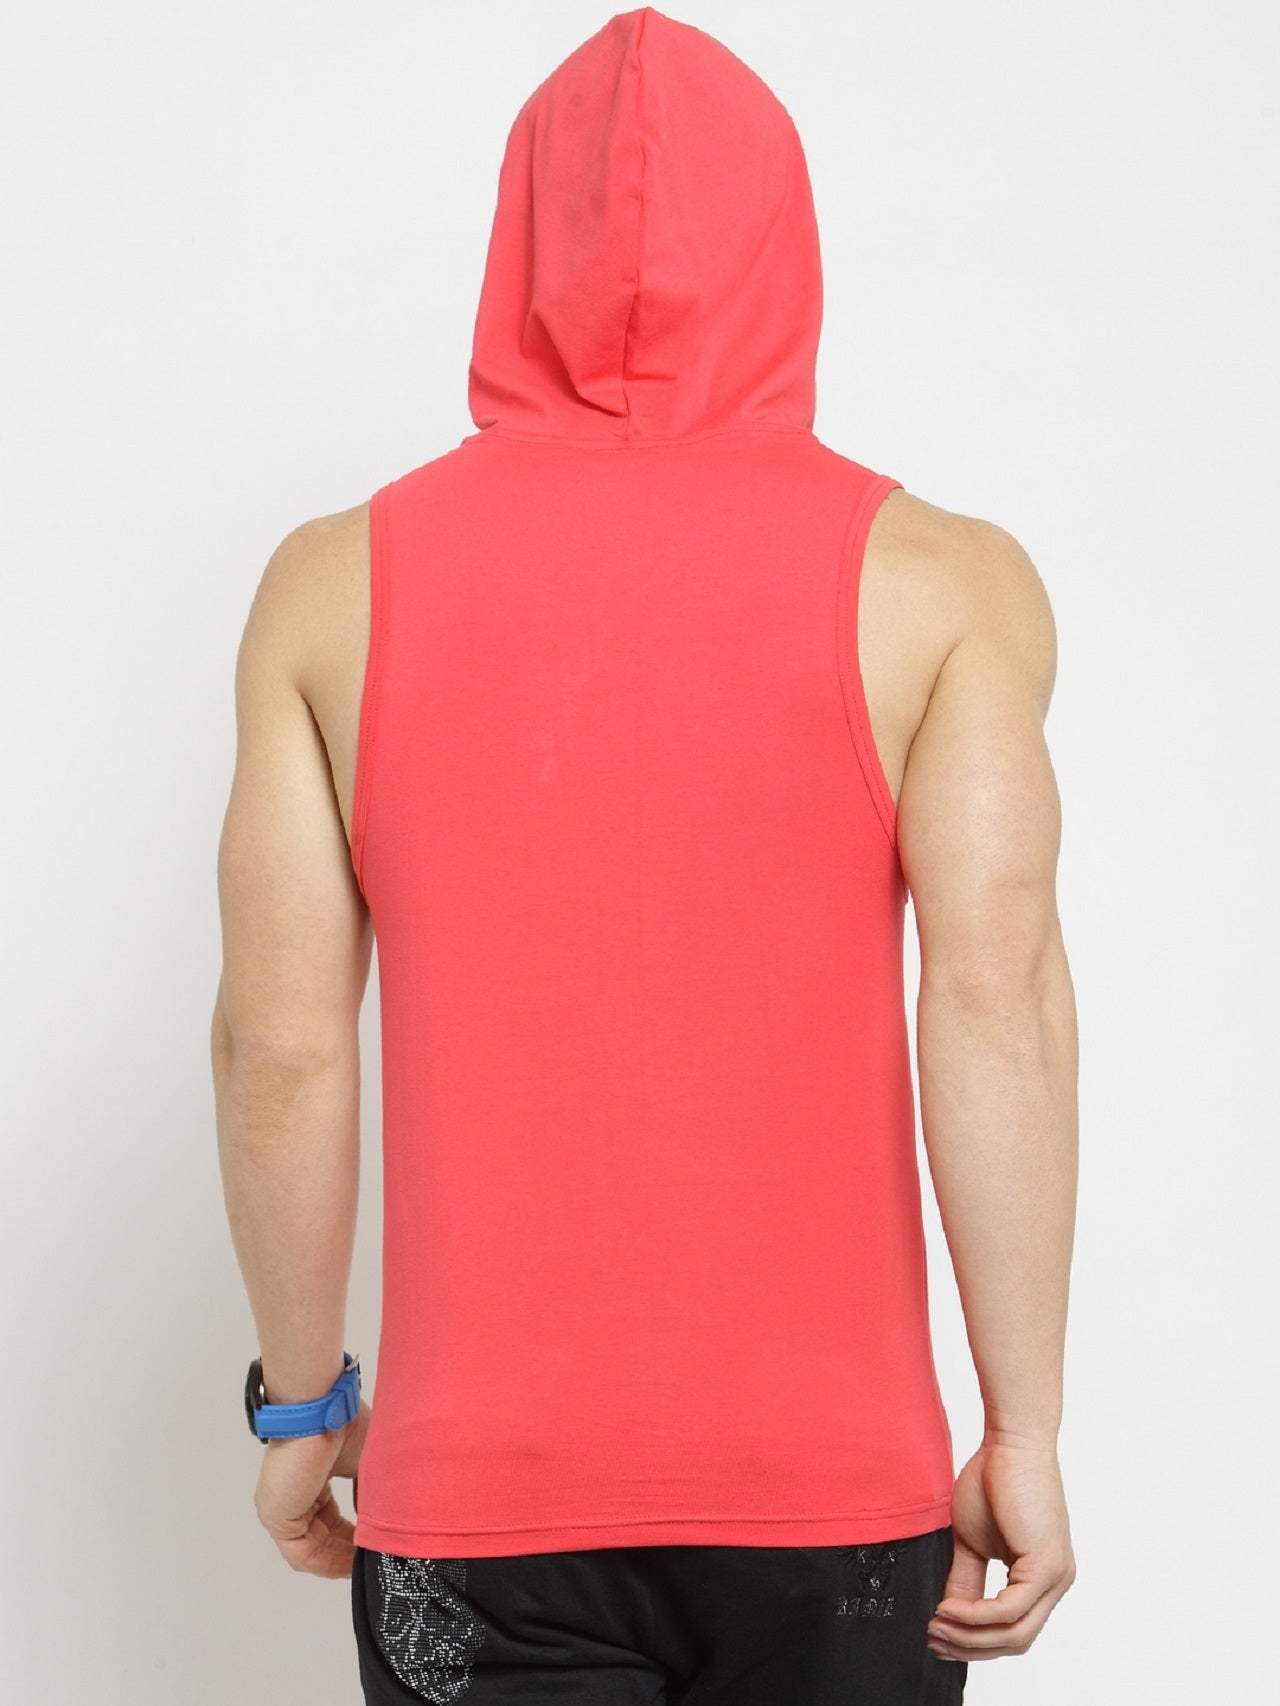 IC4 Men's Hooded Vest